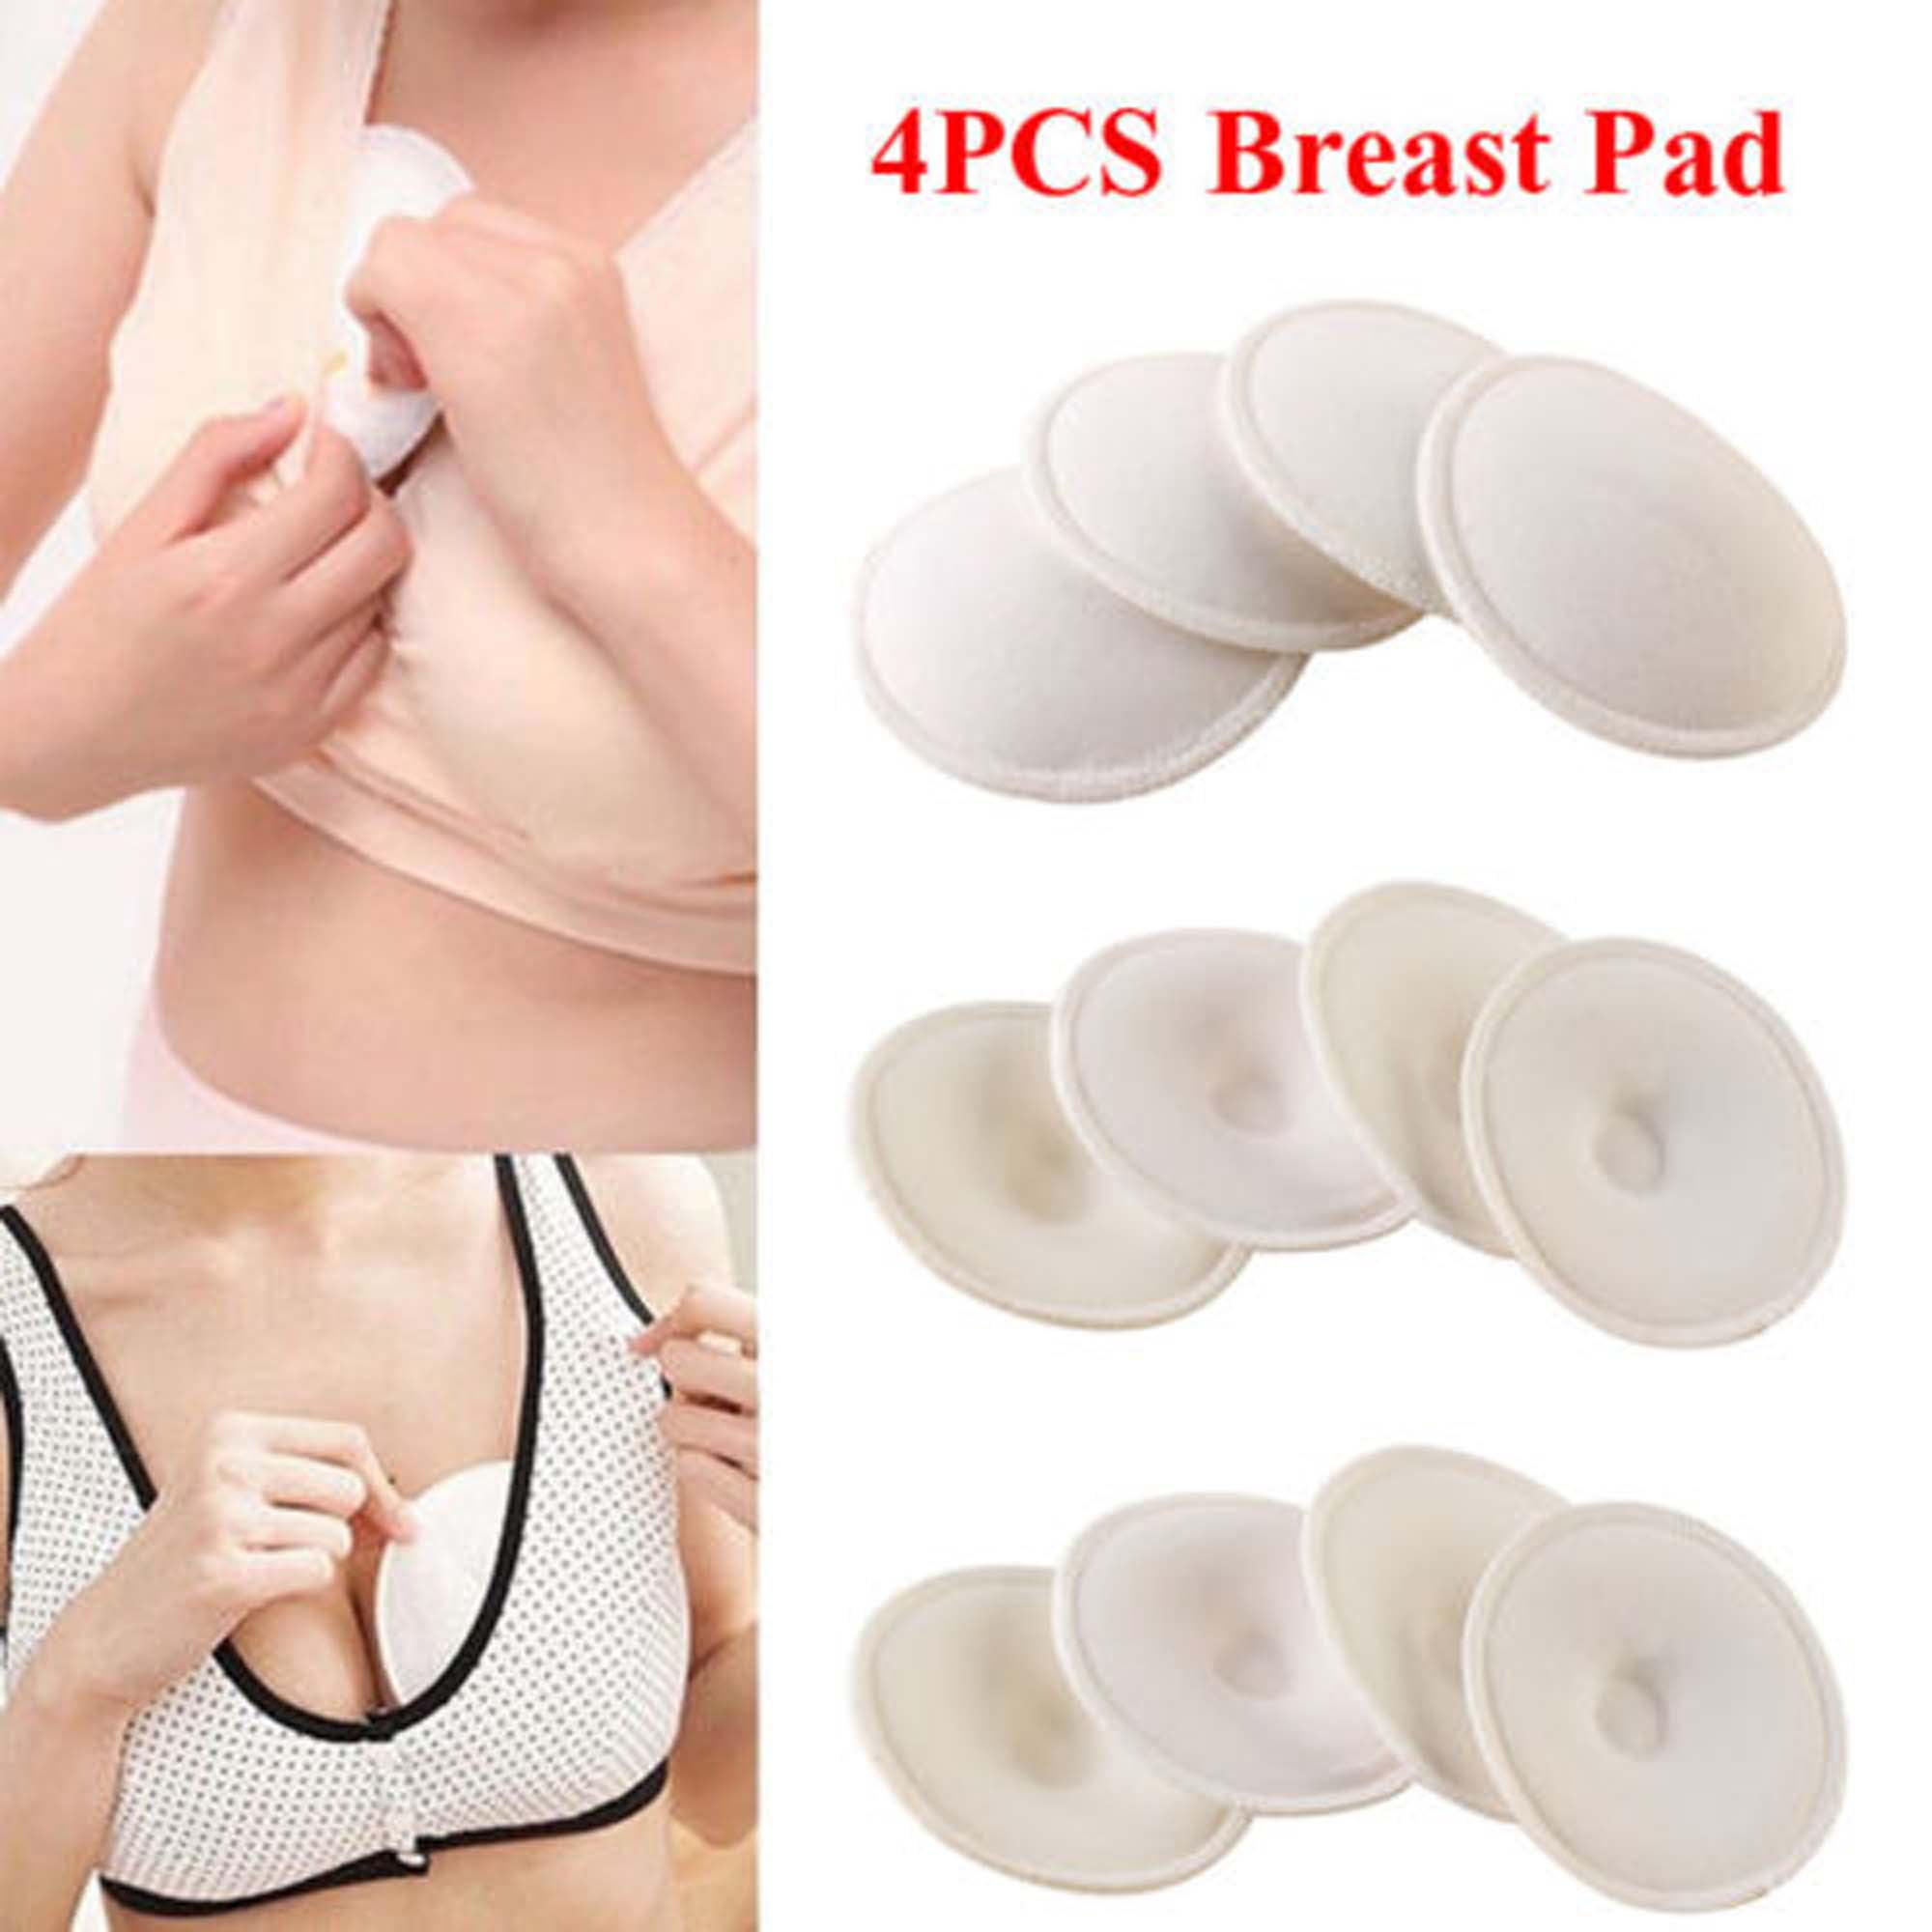 4pcs Breast Pads Washable Reusable Maternity Nursing Organic Plain Pad HC